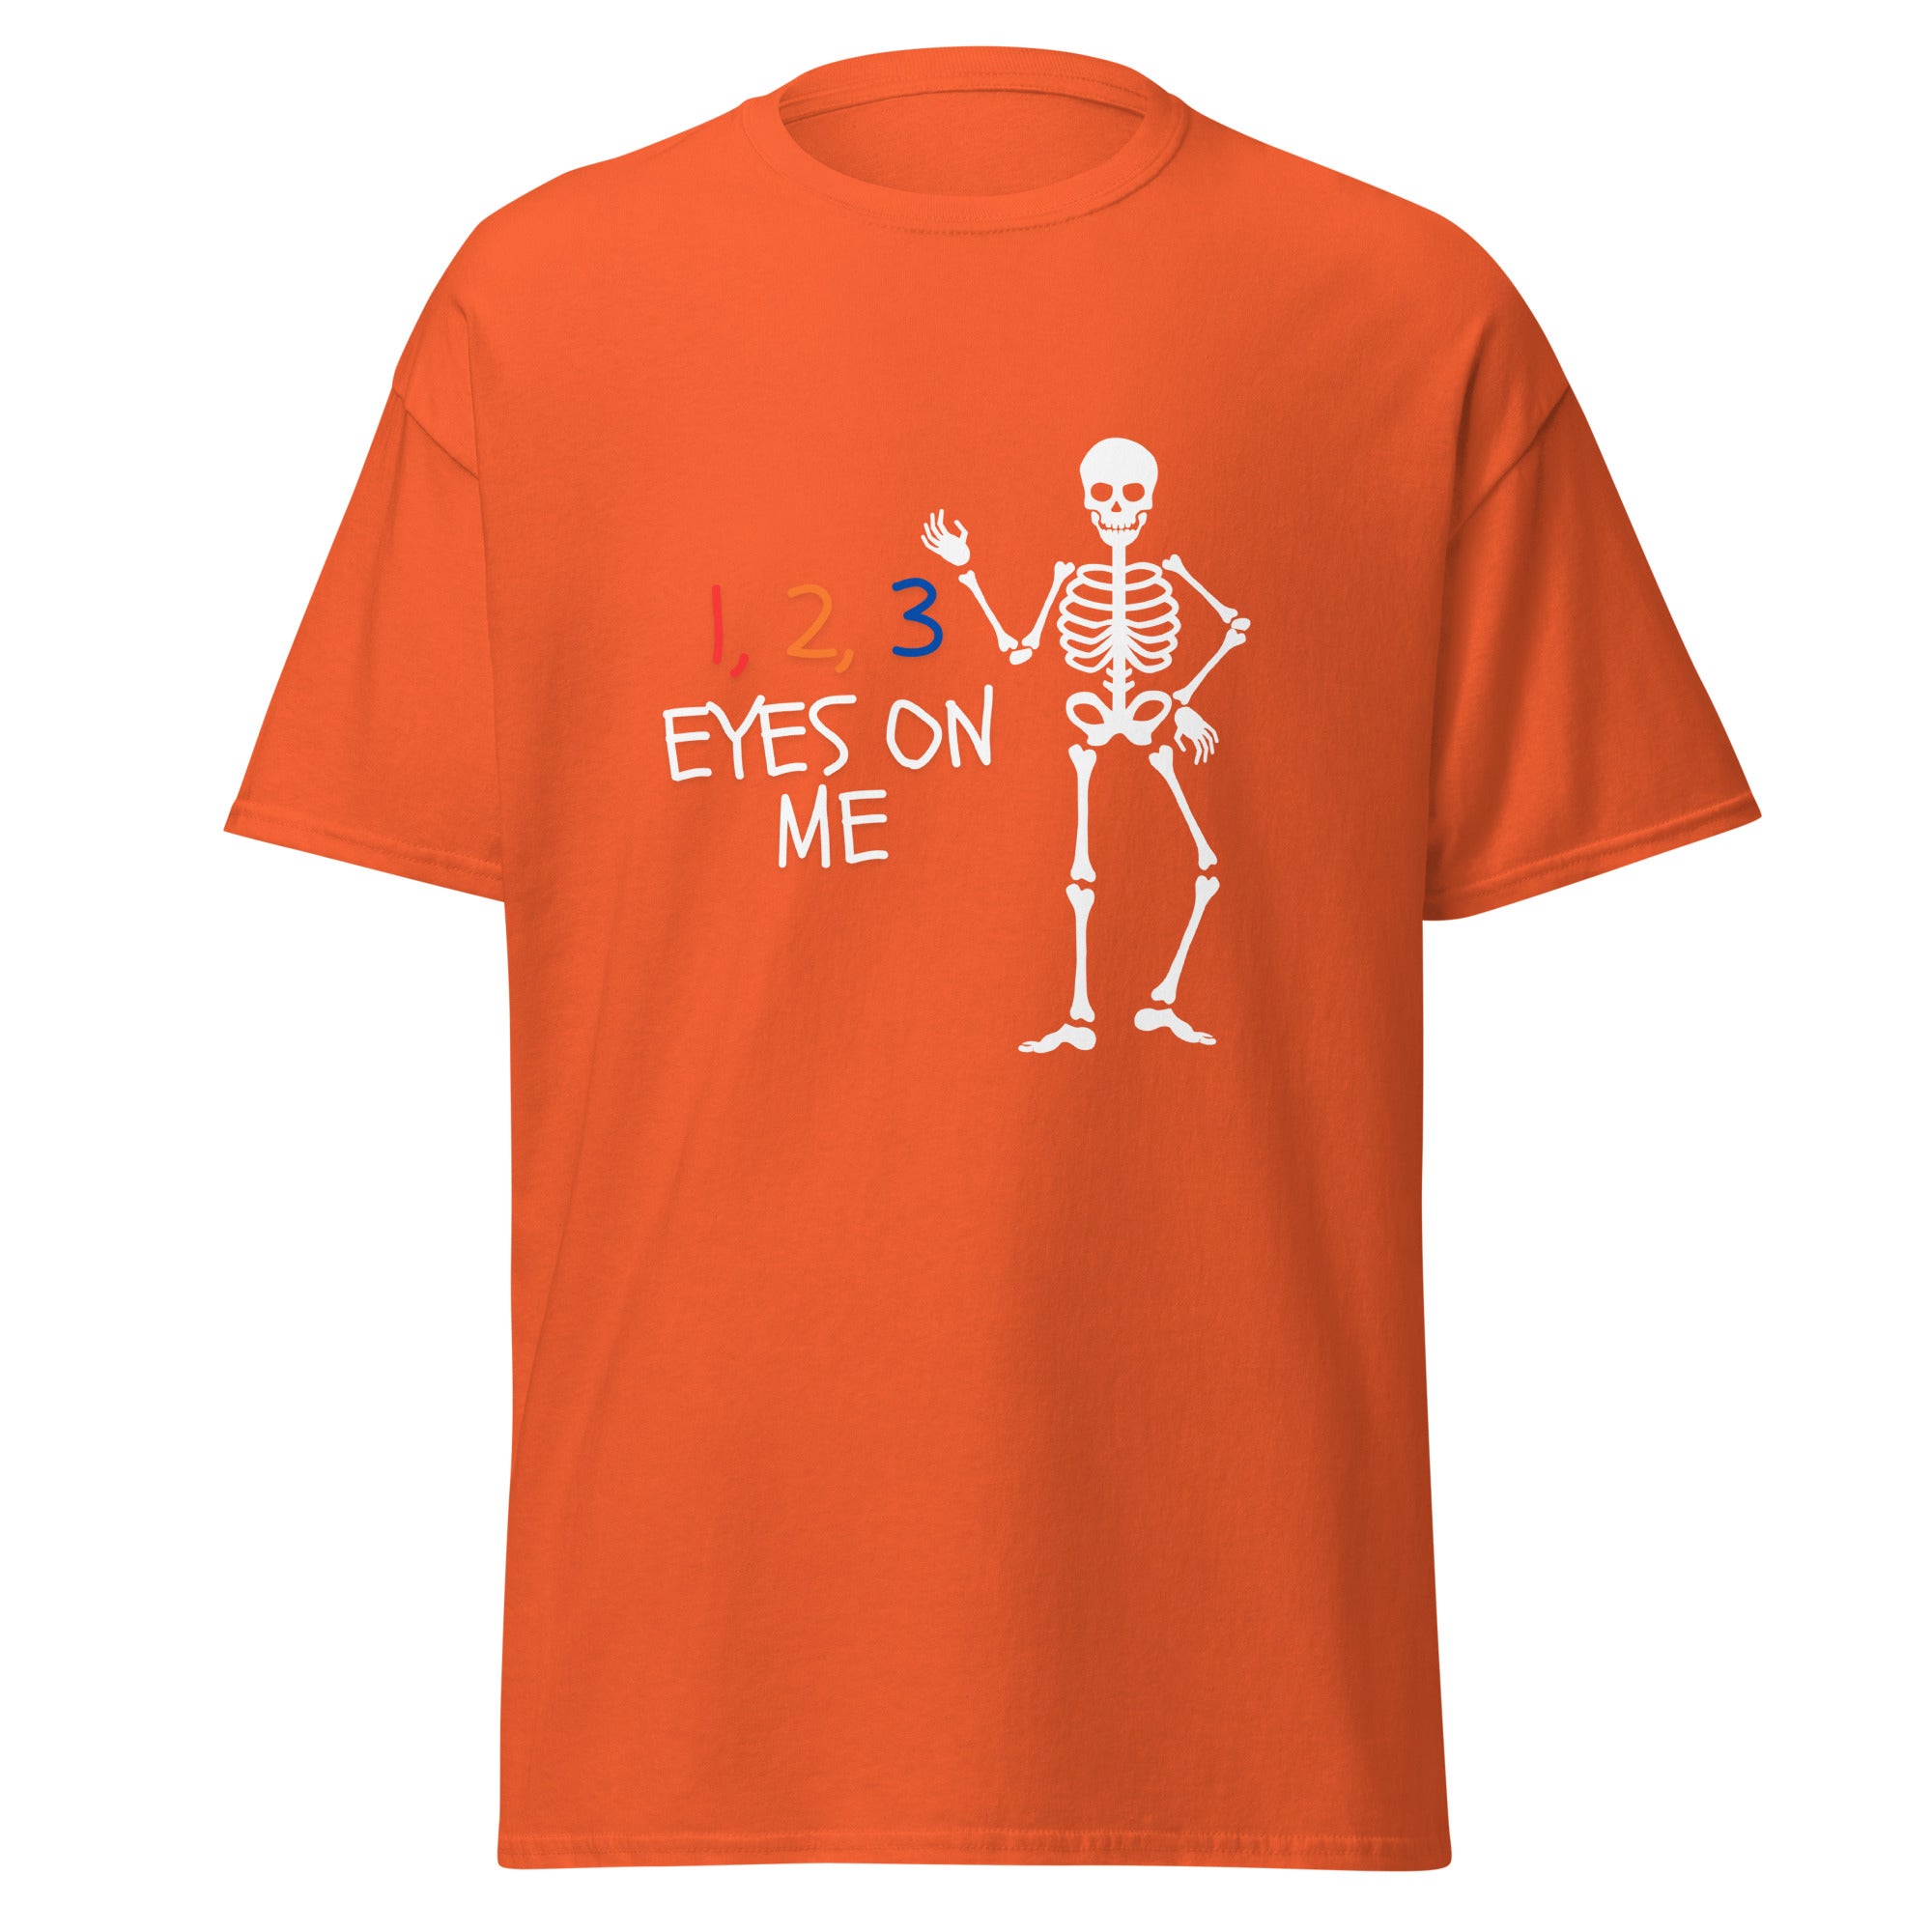 1,2,3 Eyes On Me. Halloween T Shirt. Unisex